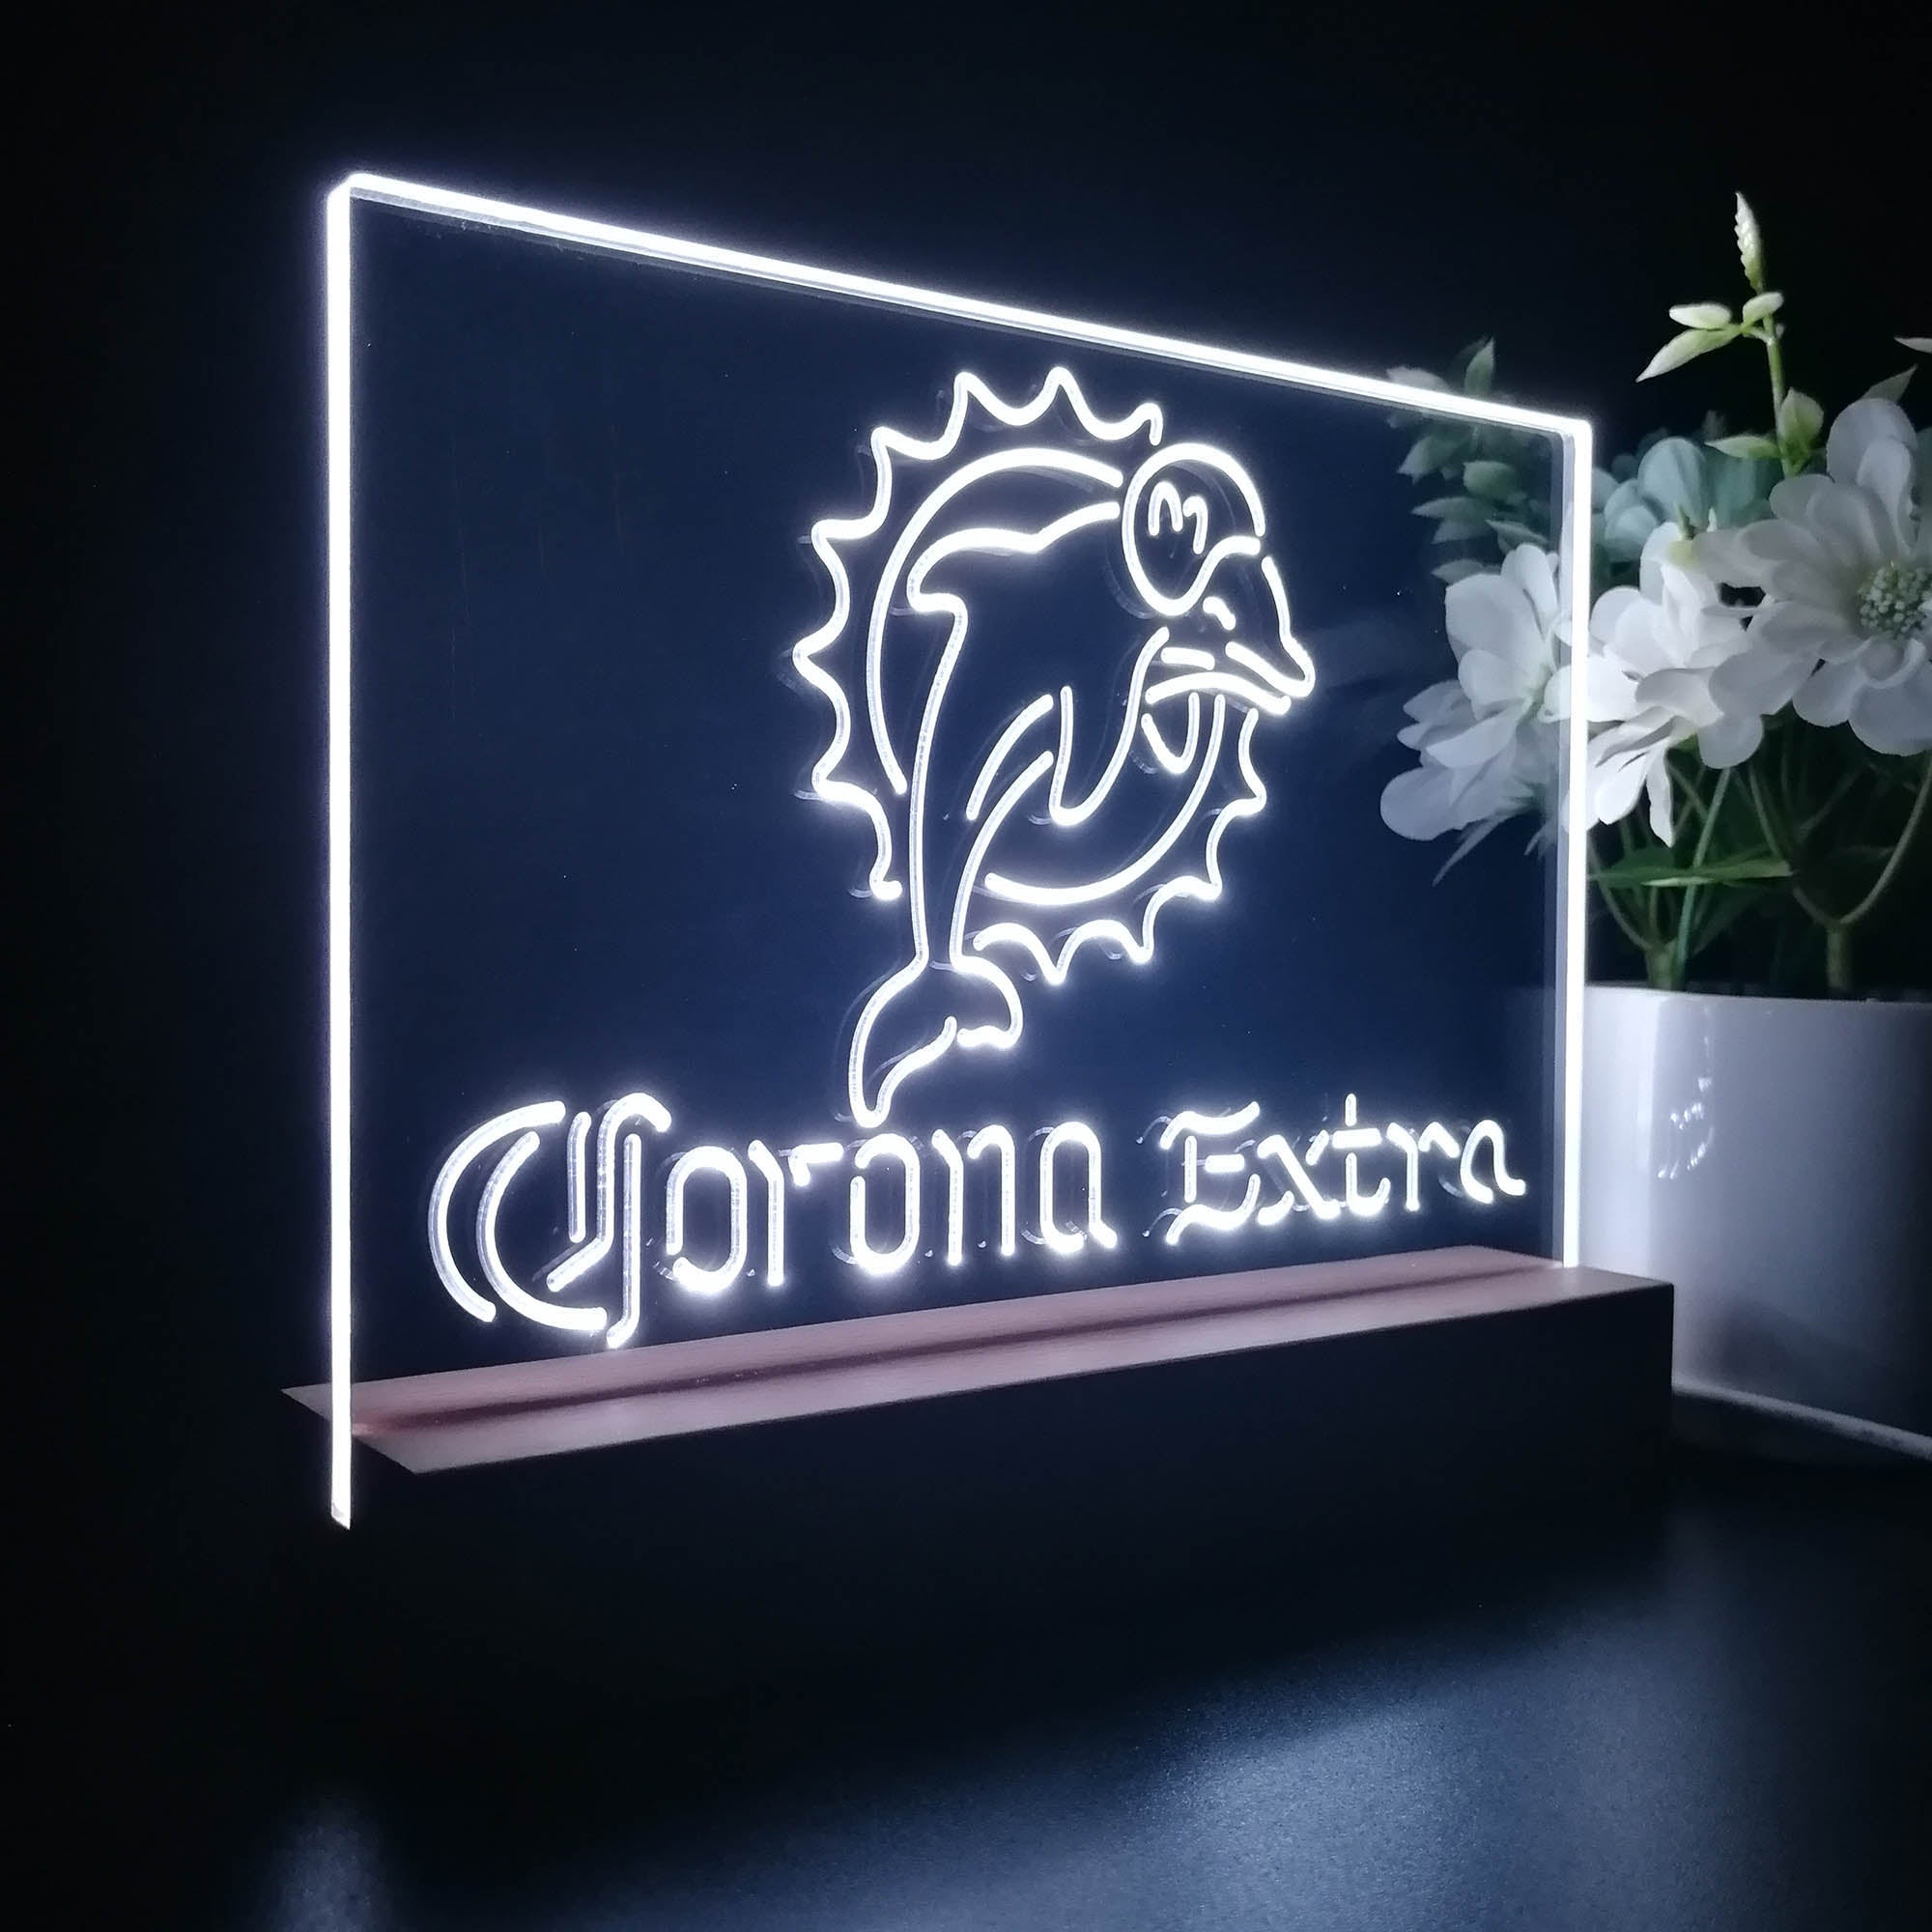 Corona Extra Bar Miami Dolphins Est.1966 Sport Team Night Light 3D Illusion Lamp